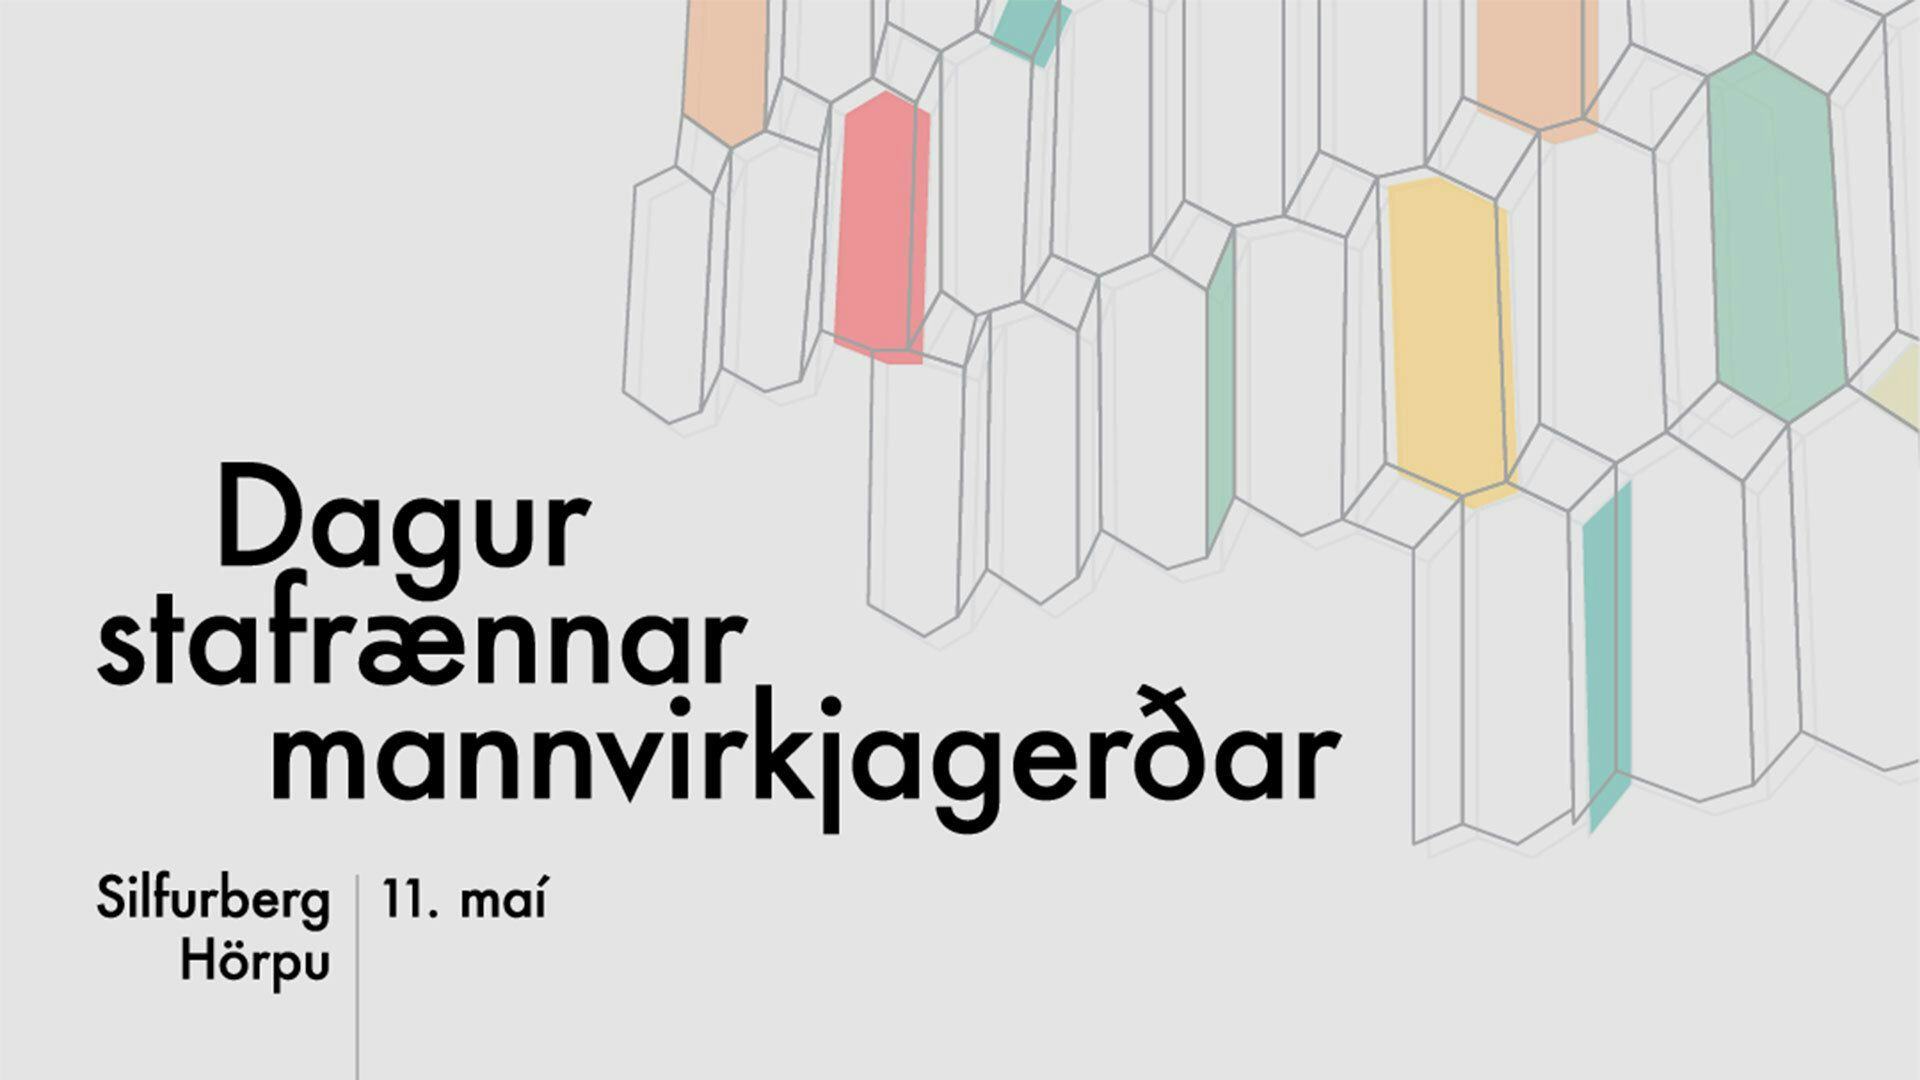 Some Icelandic texts set against background of geometric shapes